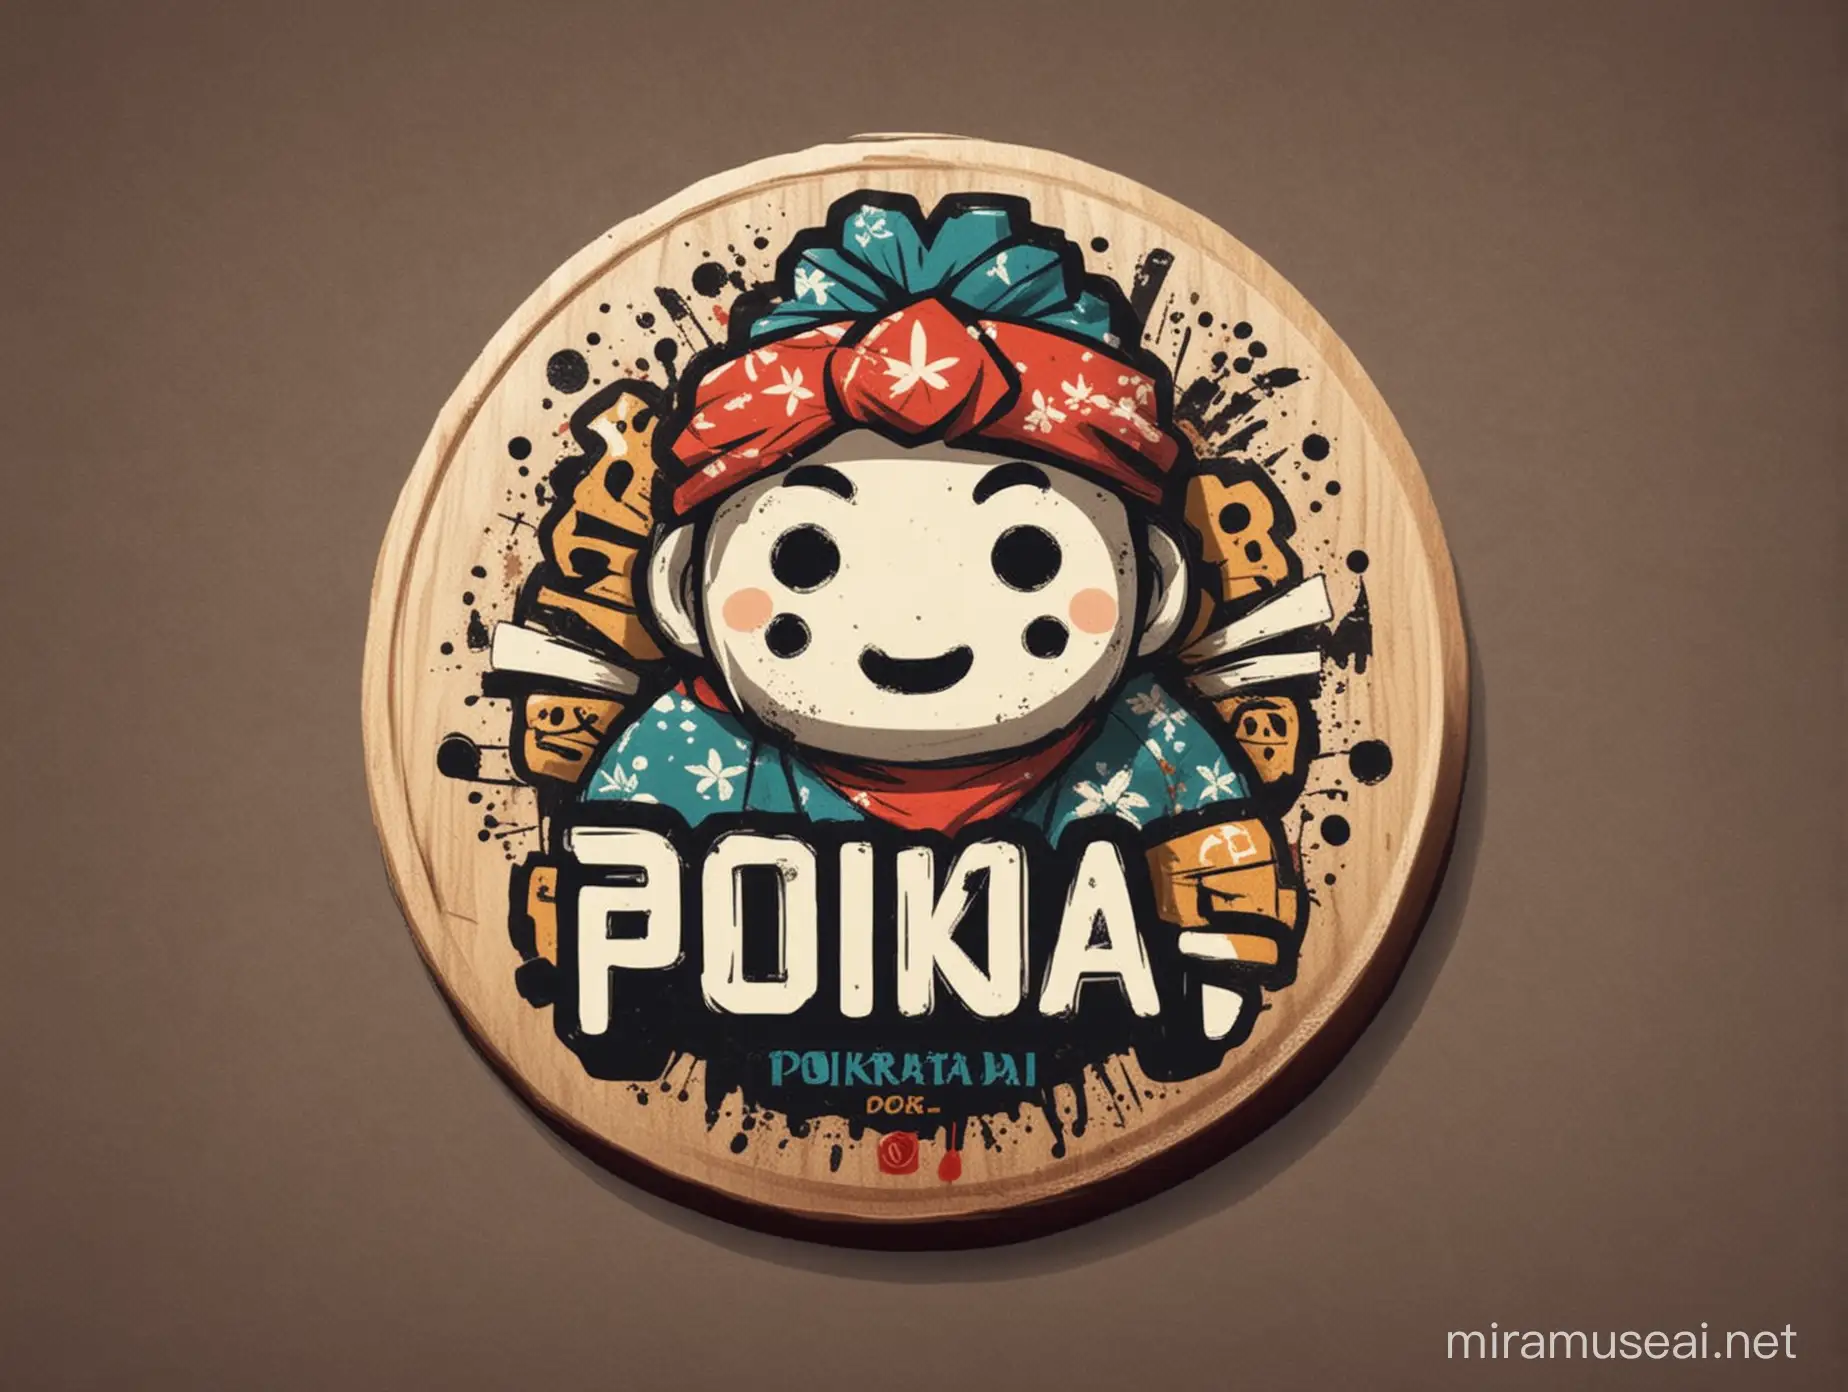 Unique Logo Design Pictographic POKUPAIKA Emblem for HighPriced Useless Items